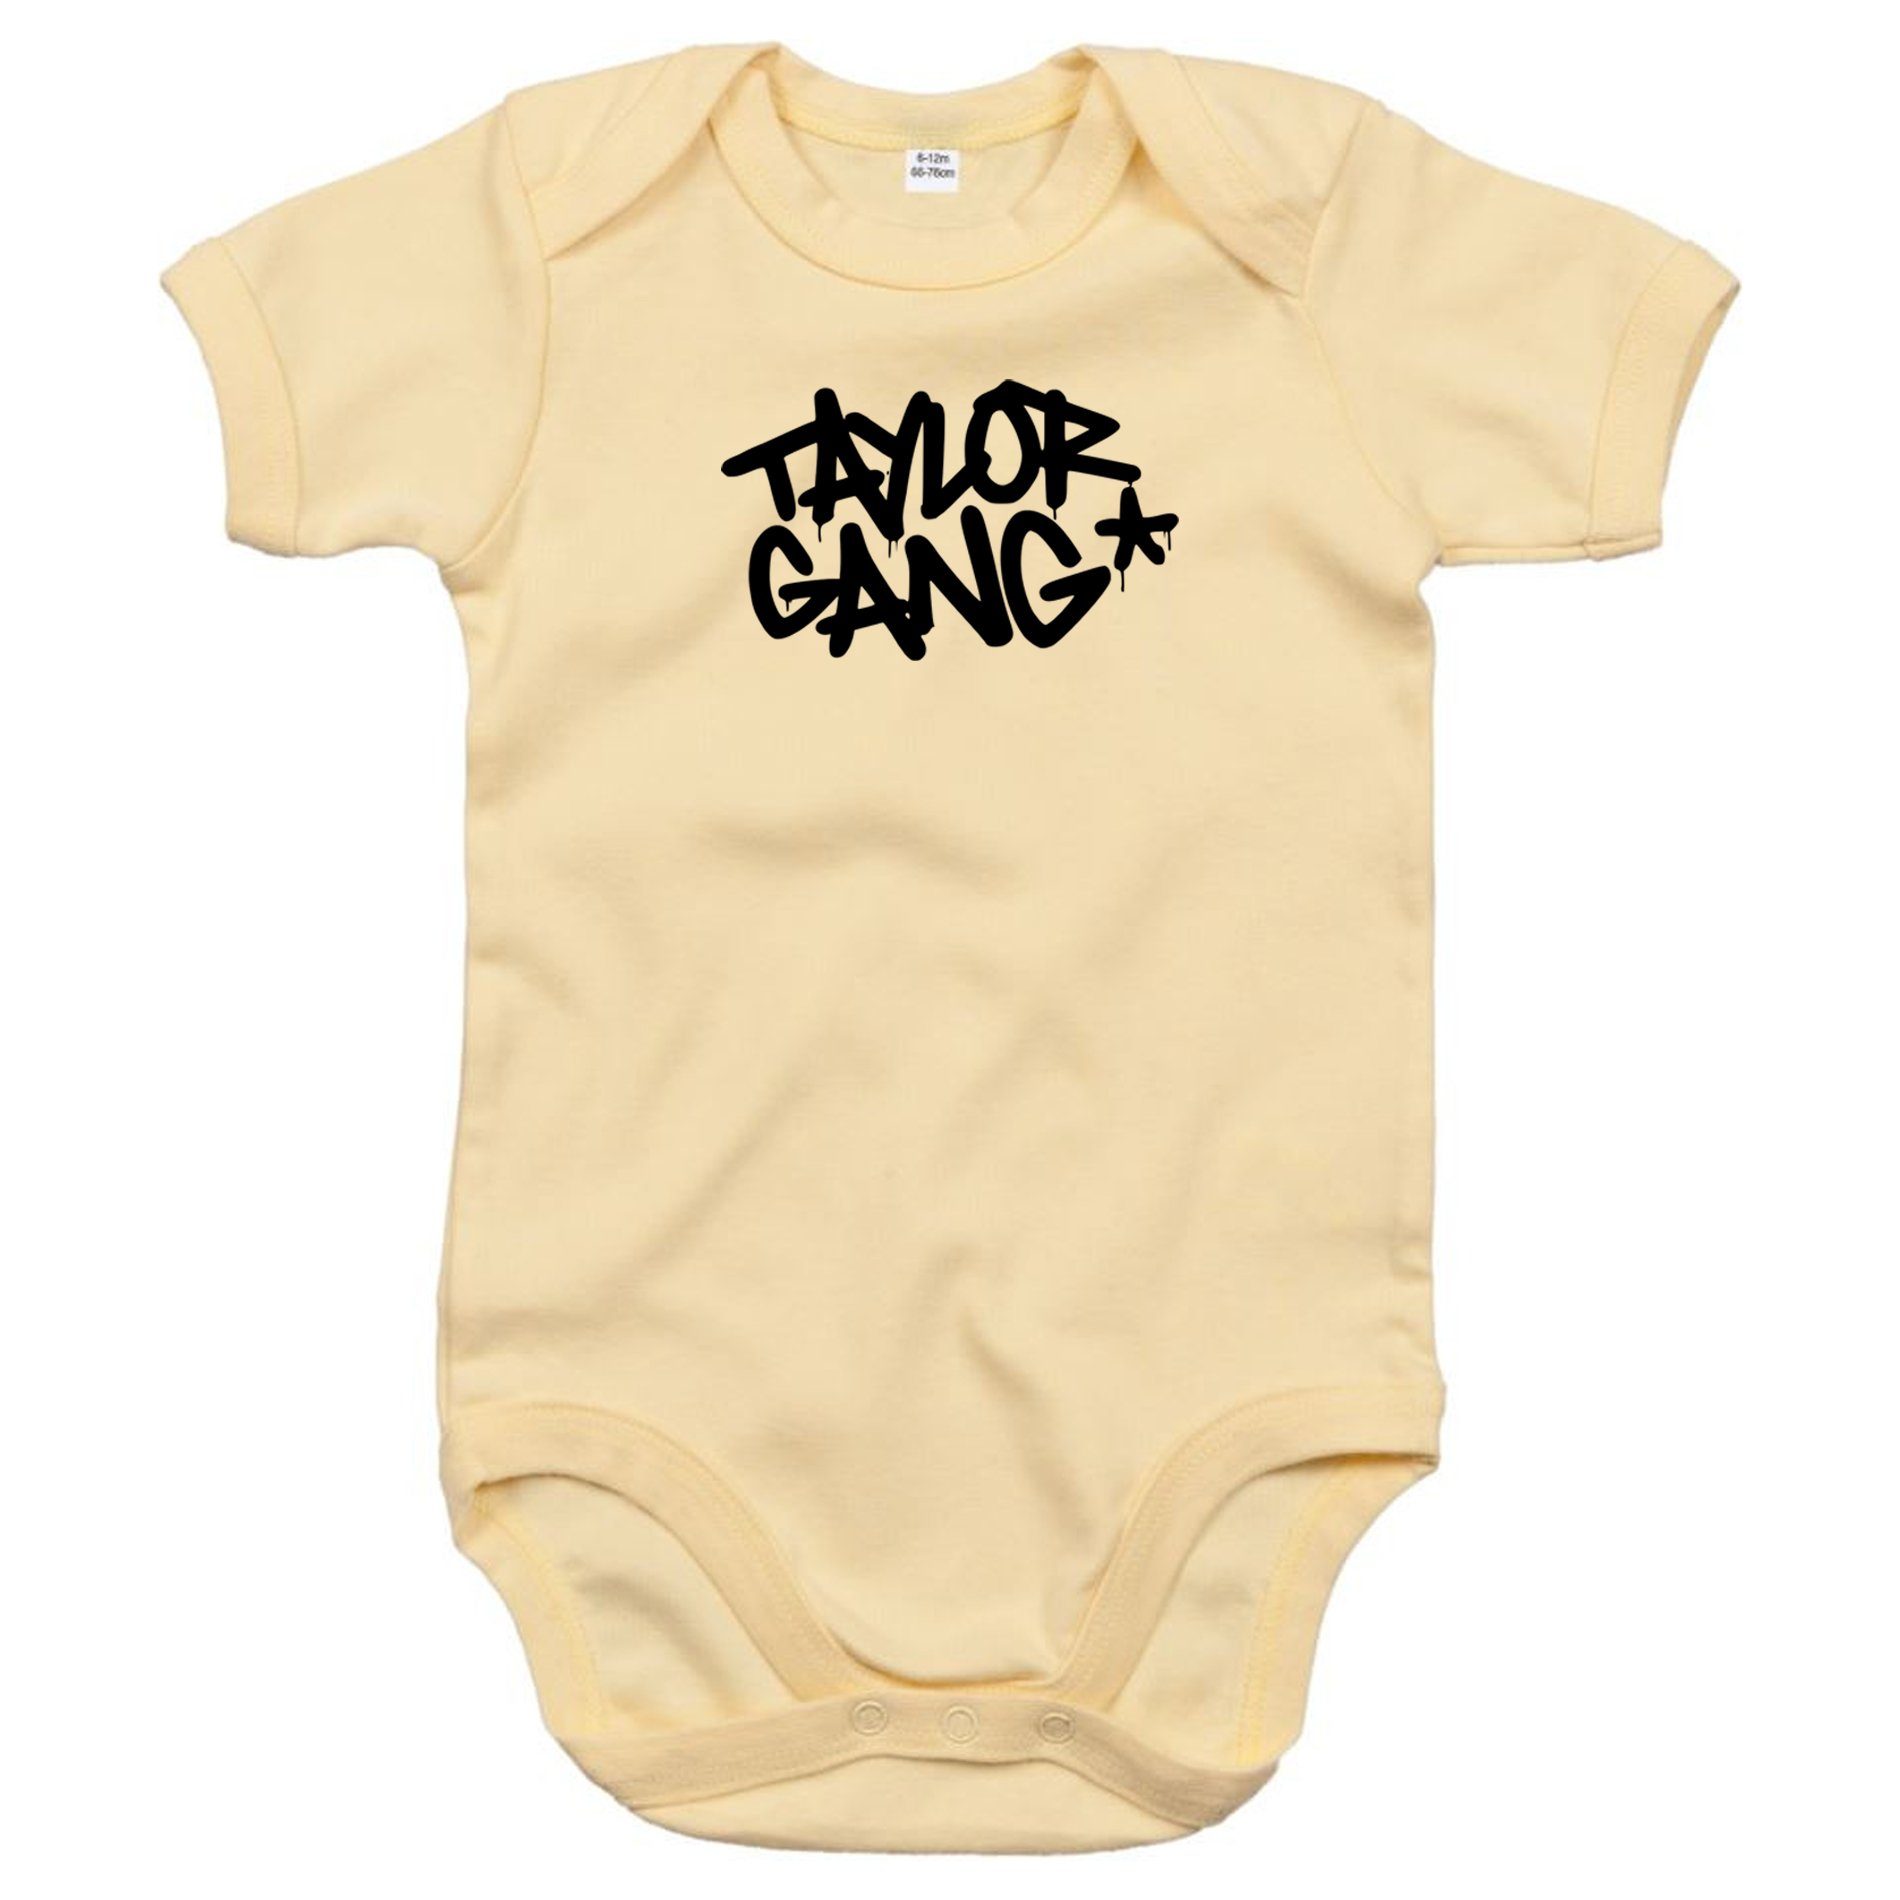 Blondie & Brownie Strampler Baby Strampler Body Shirt Taylor Gang Stern Wiz Rapper Khalifa Beige